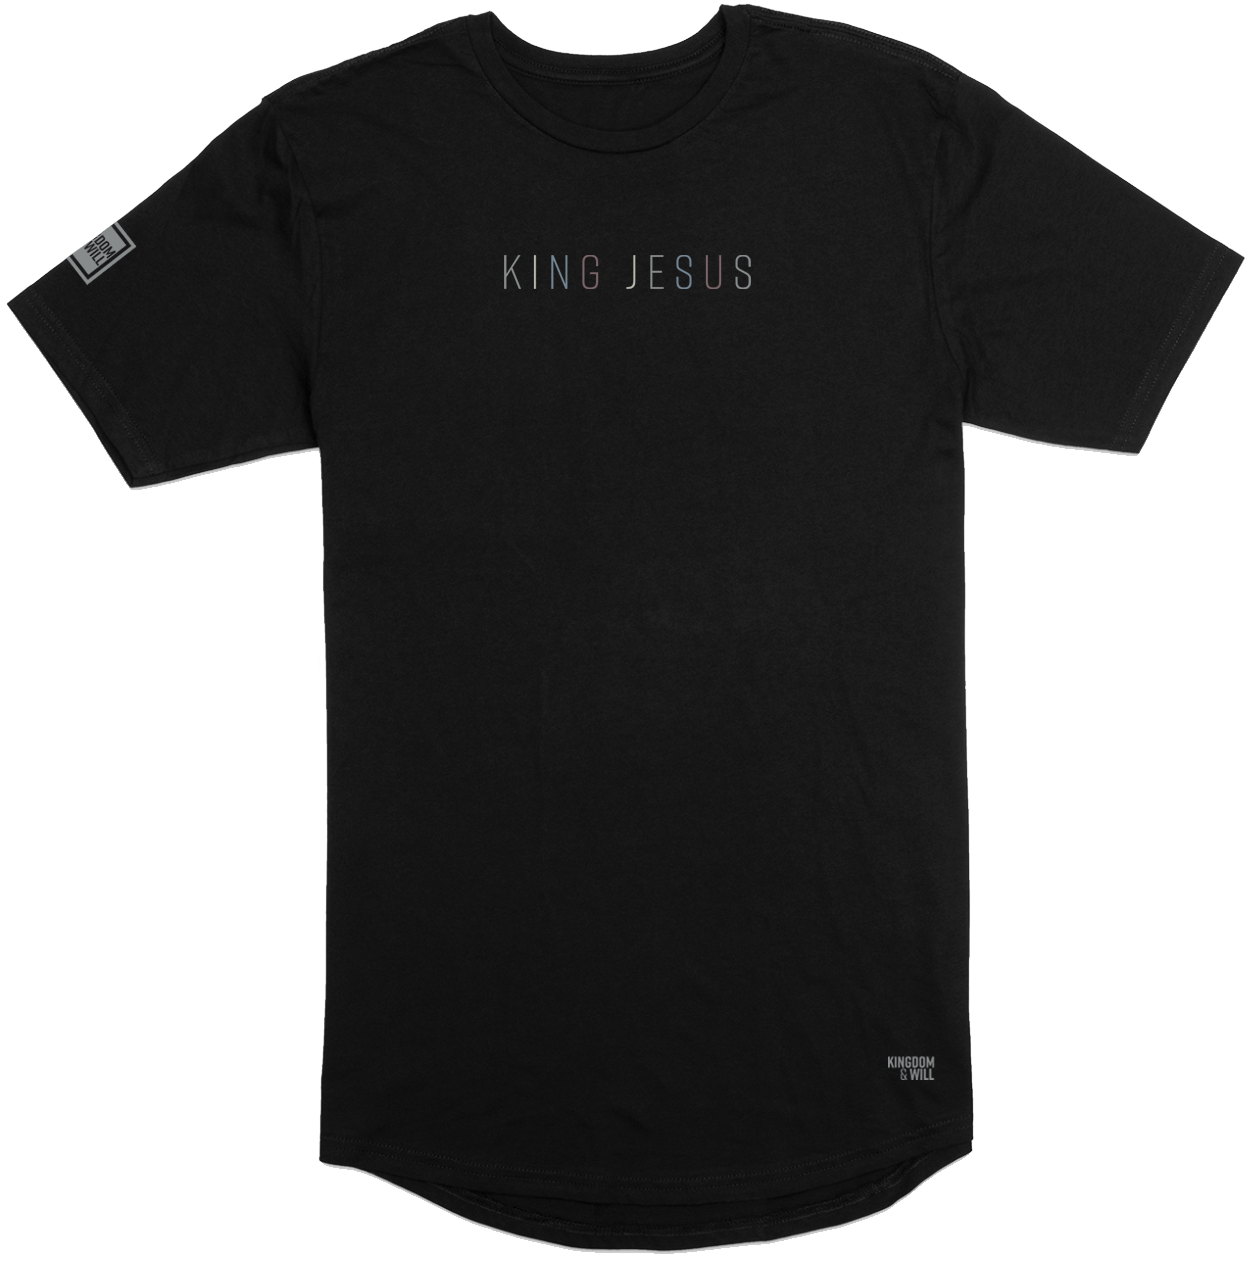 Jesus Christ T-Shirt Black X-Large 